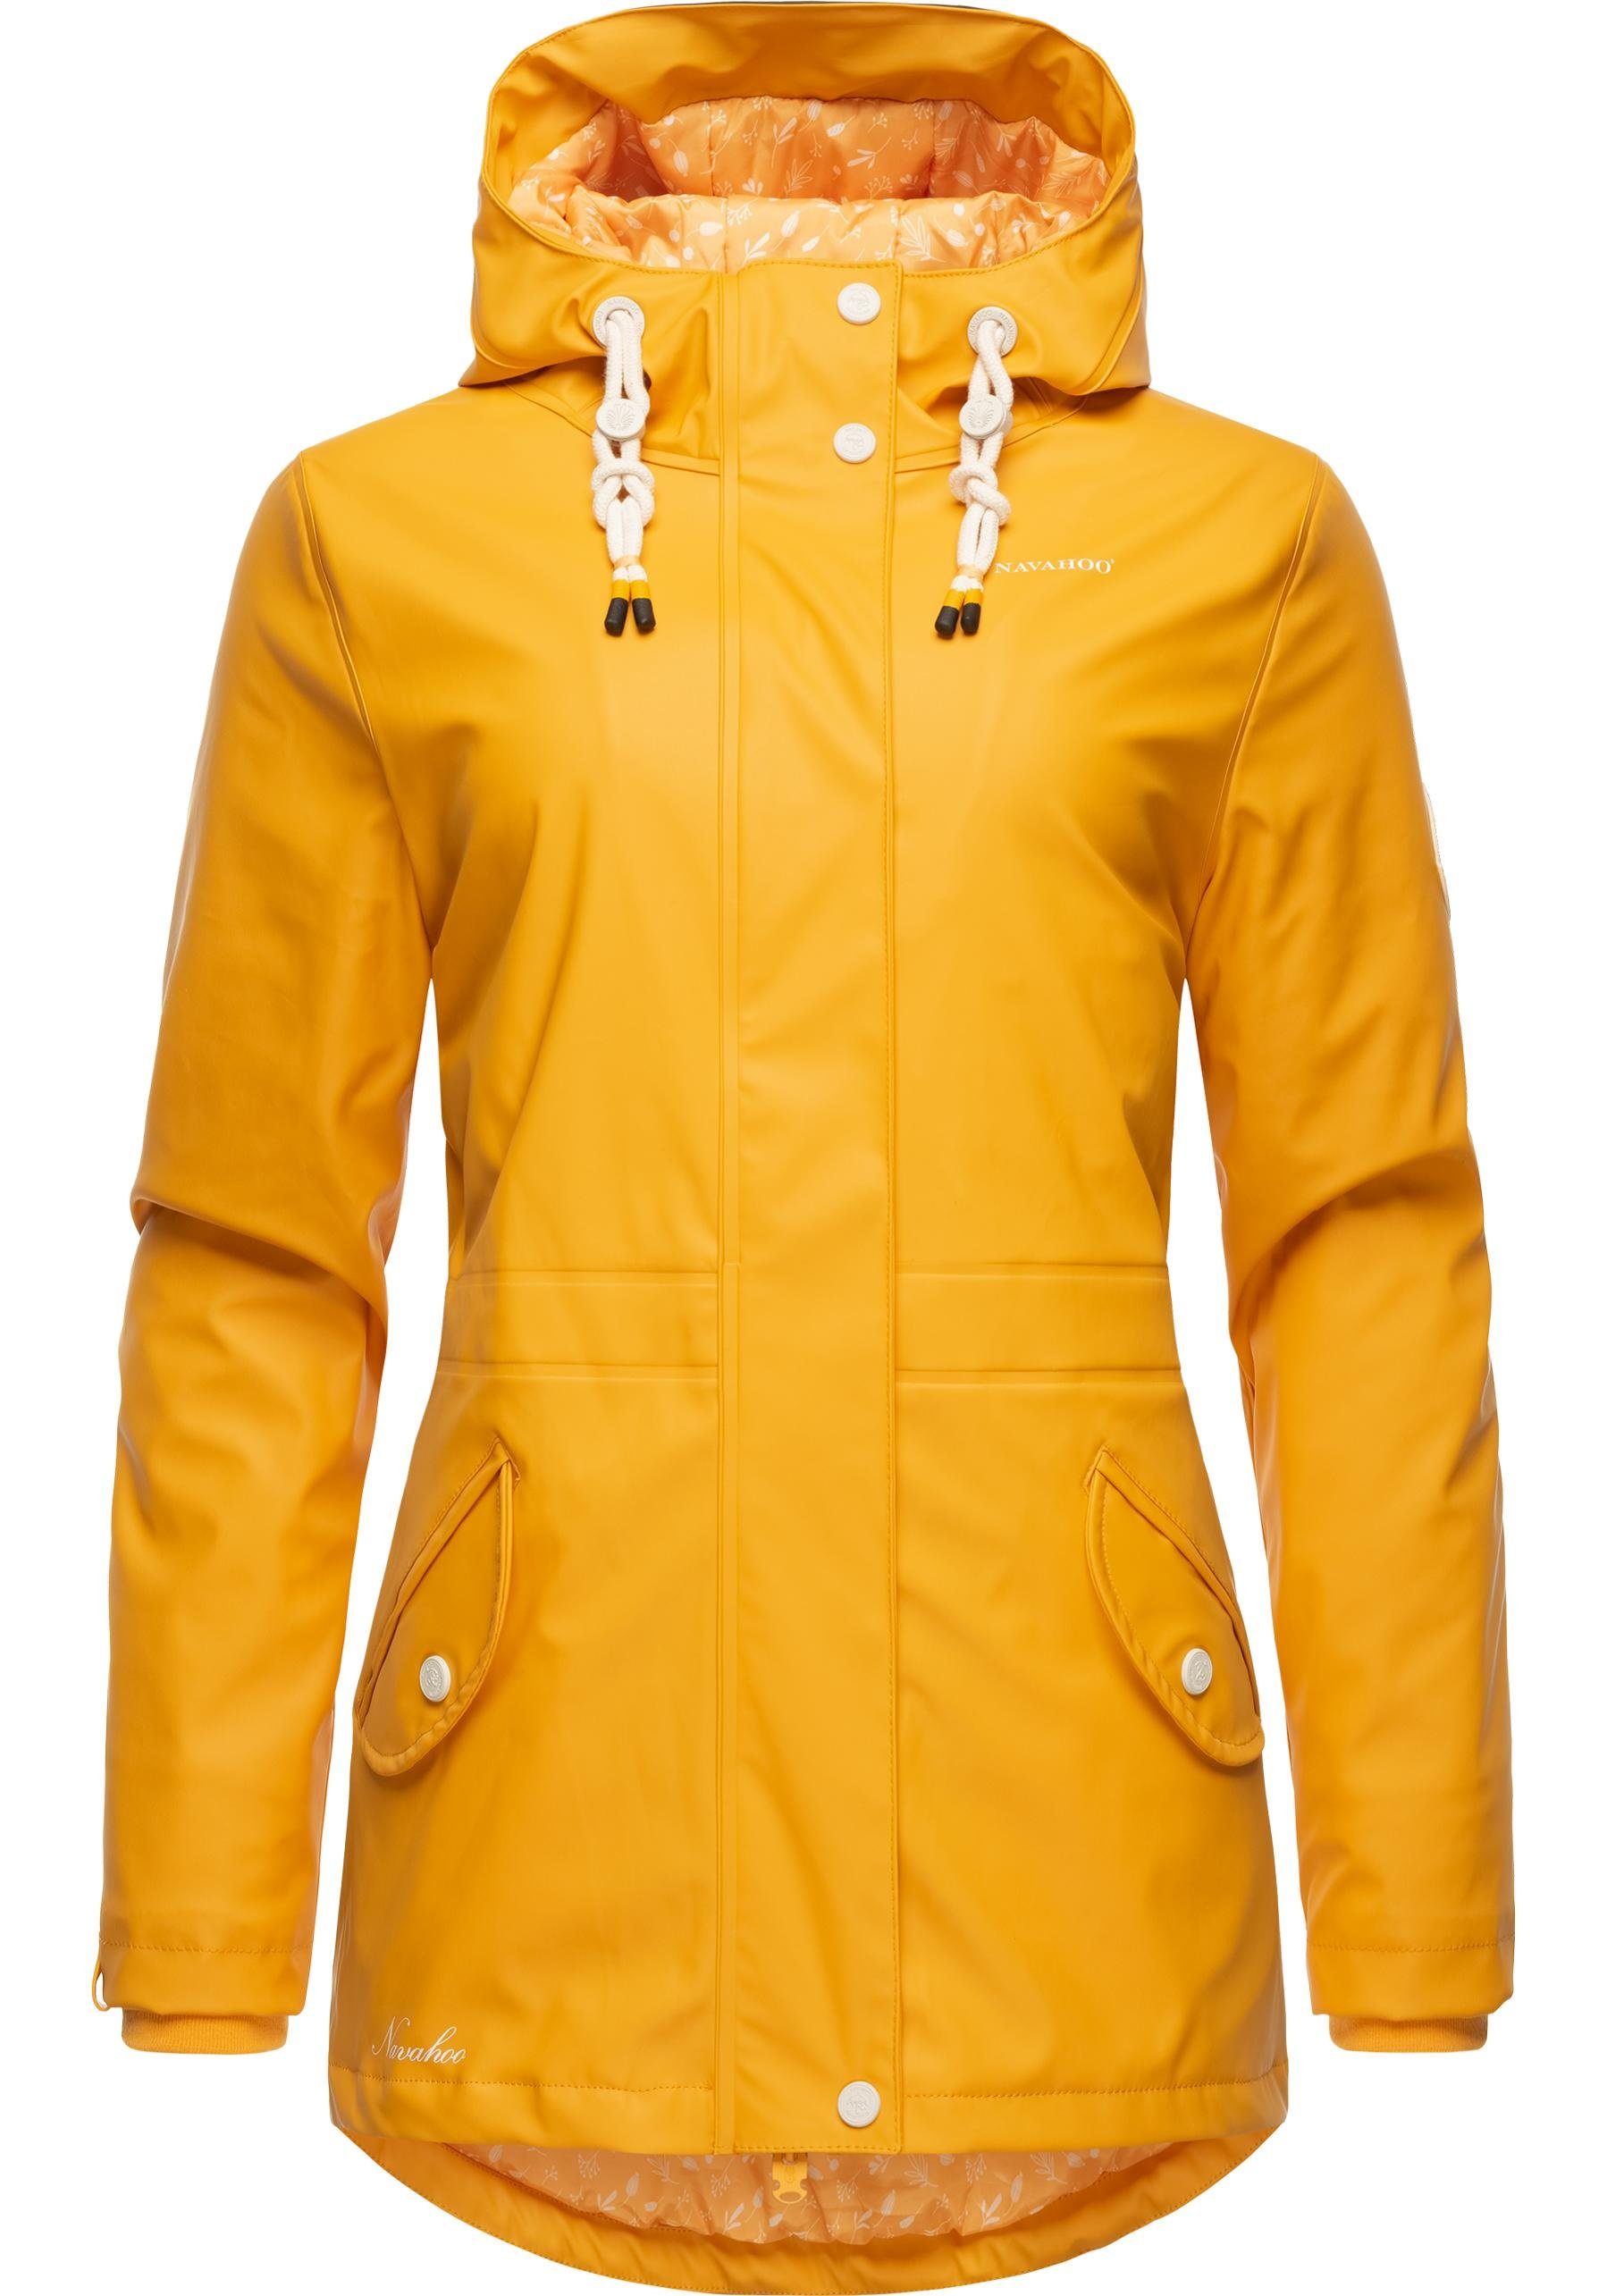 Navahoo Regenjacke Kapuze gelb mit Regenmantel Heart Oceans stylischer wasserdichter